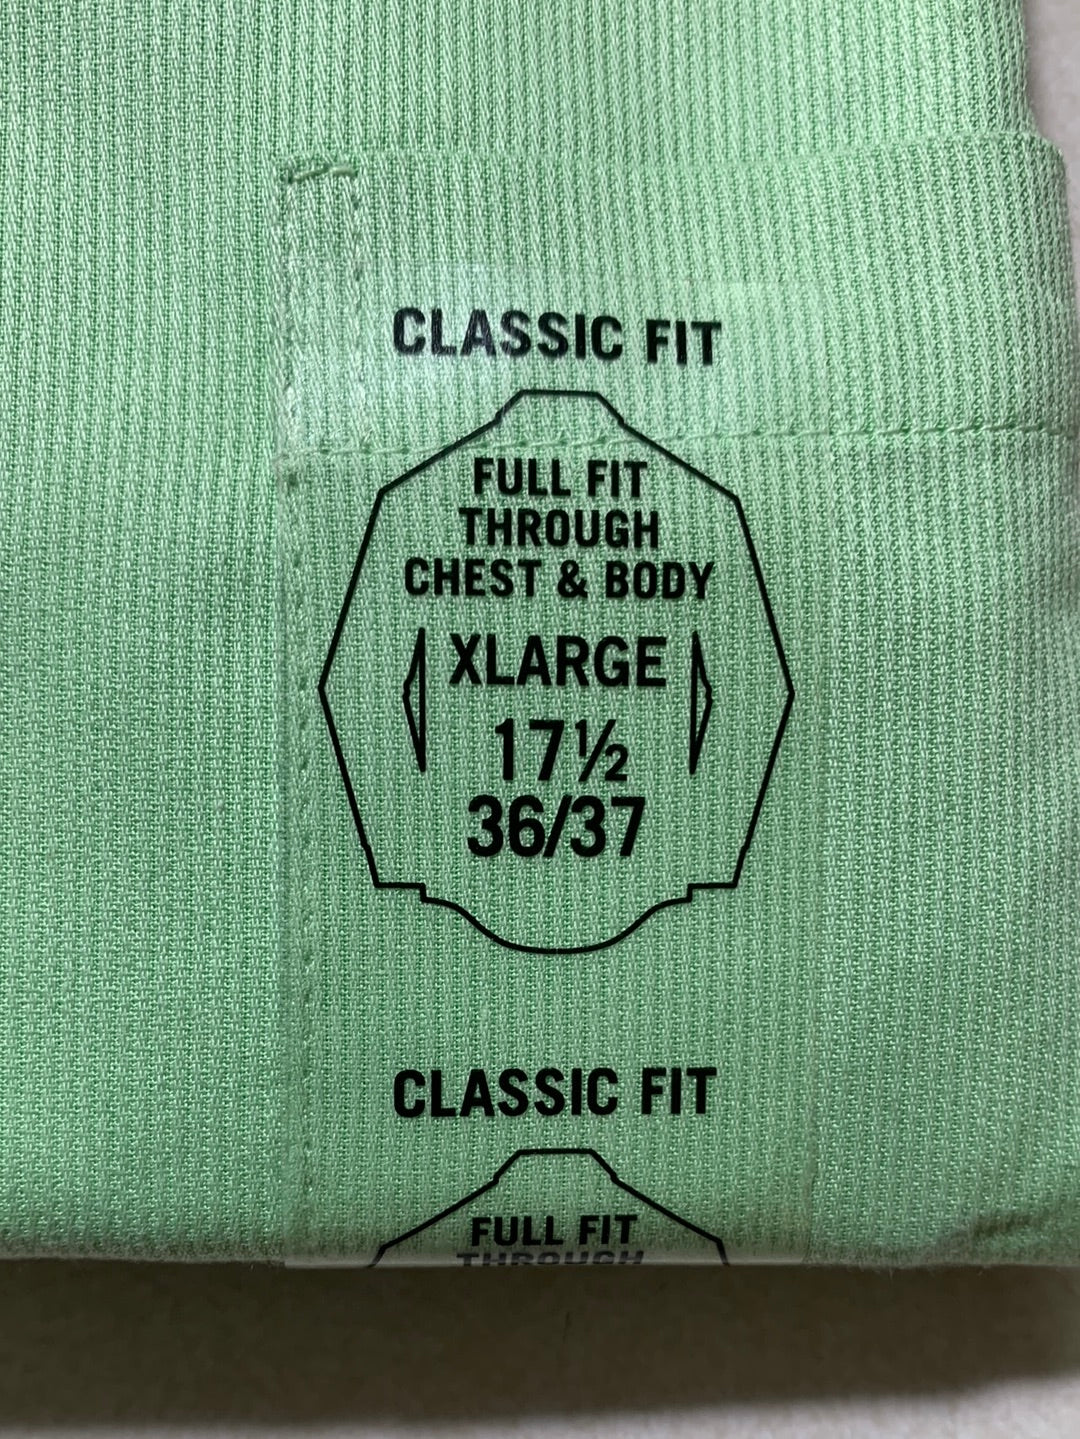 NWT - GEOFFREY BEENE green meadow Classic Fit Wrinkle Free Shirt - 17.5 36-37 XL